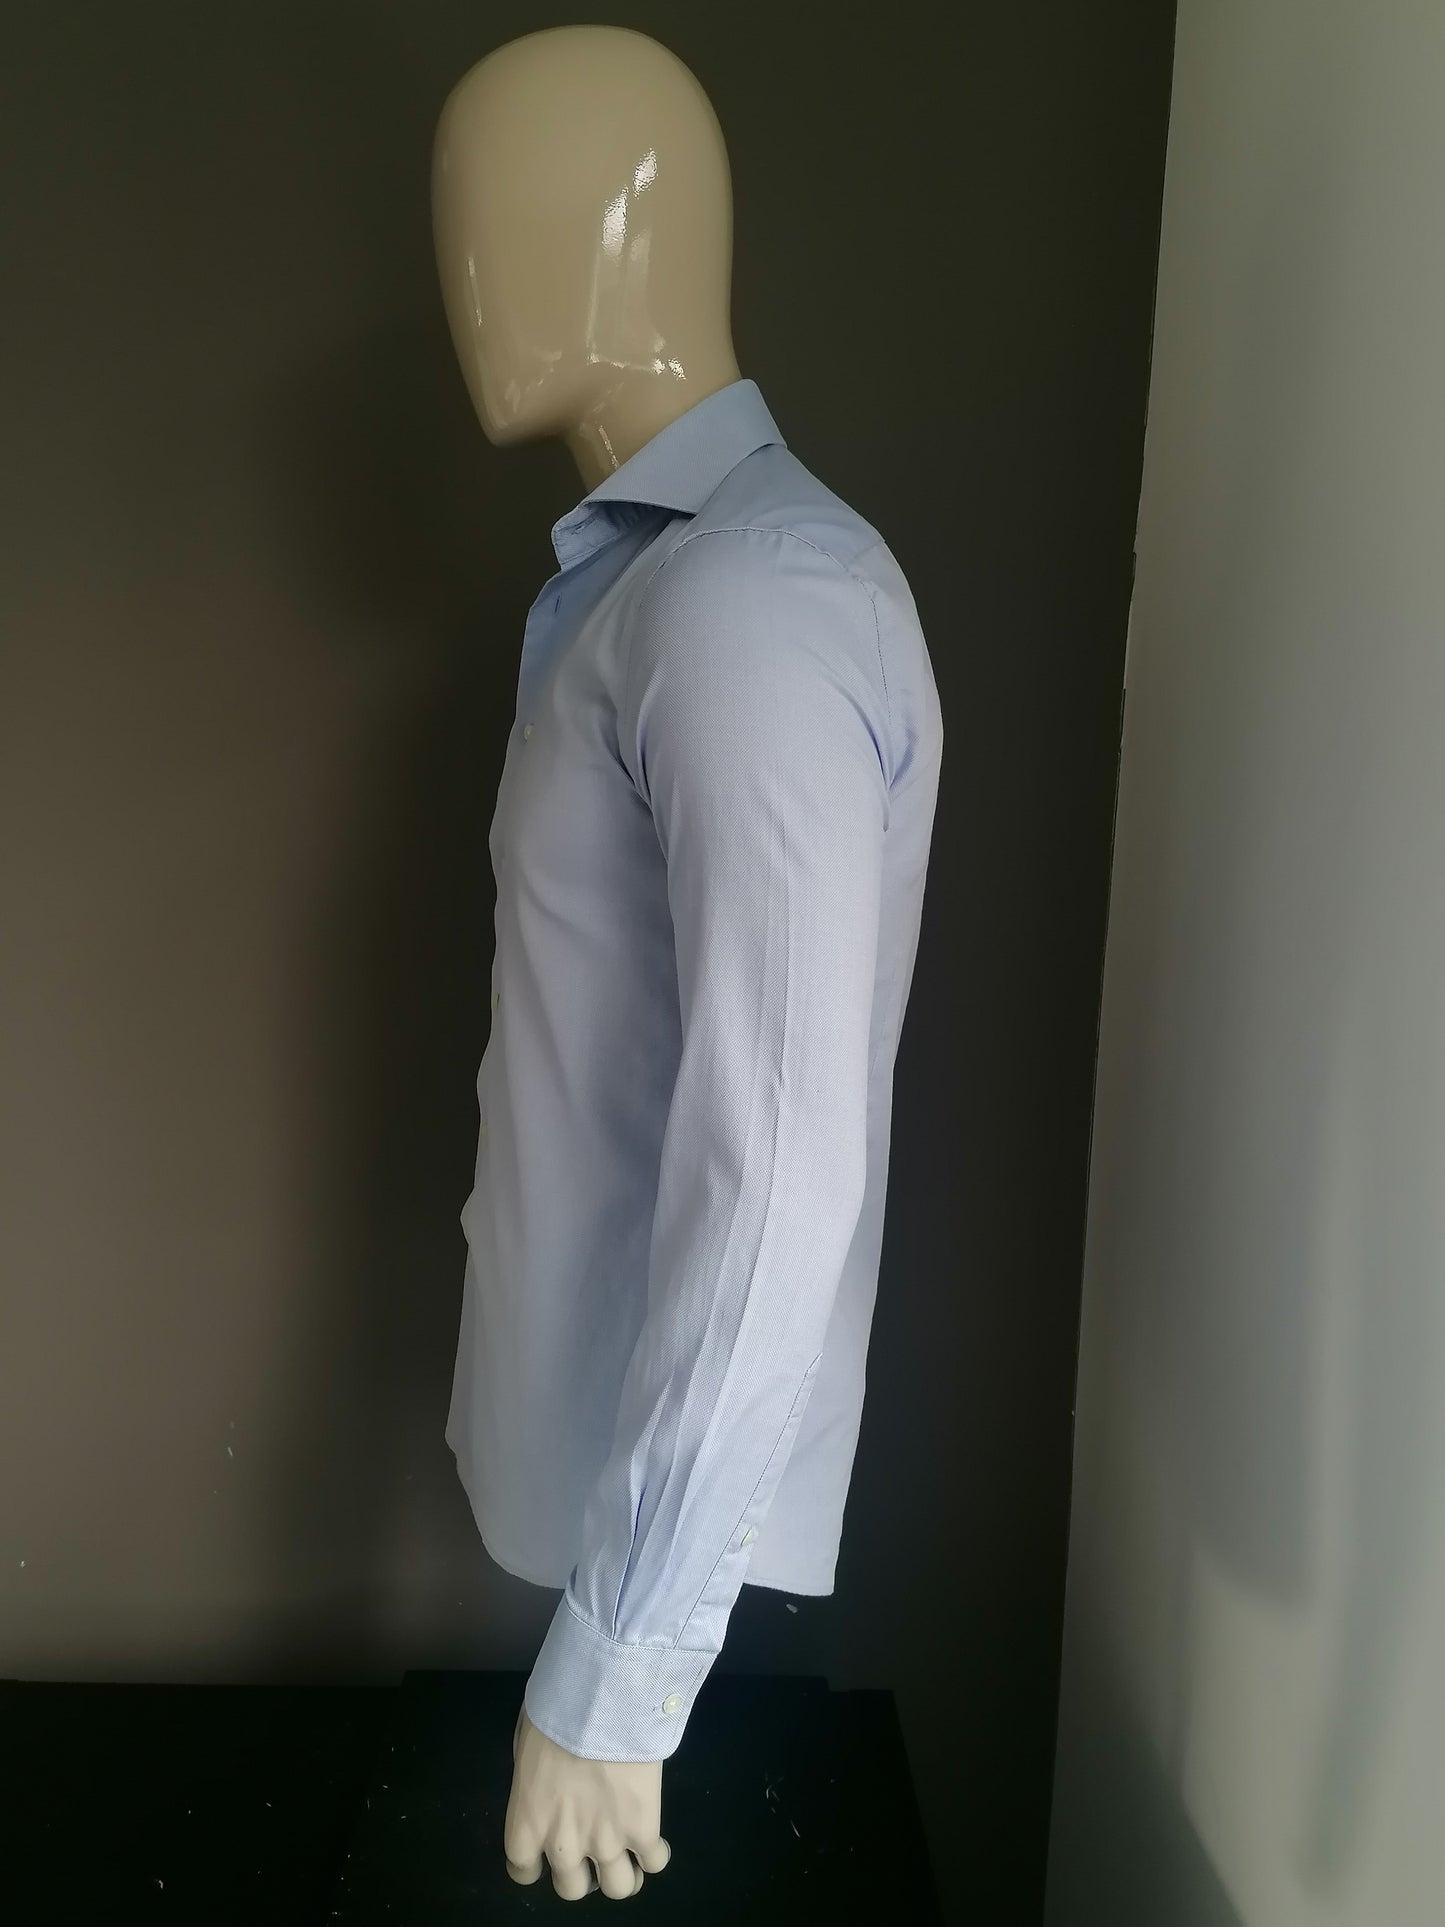 Tomasso overhemd. Blauw Wit motief. Maat 38 / S. Tailored.